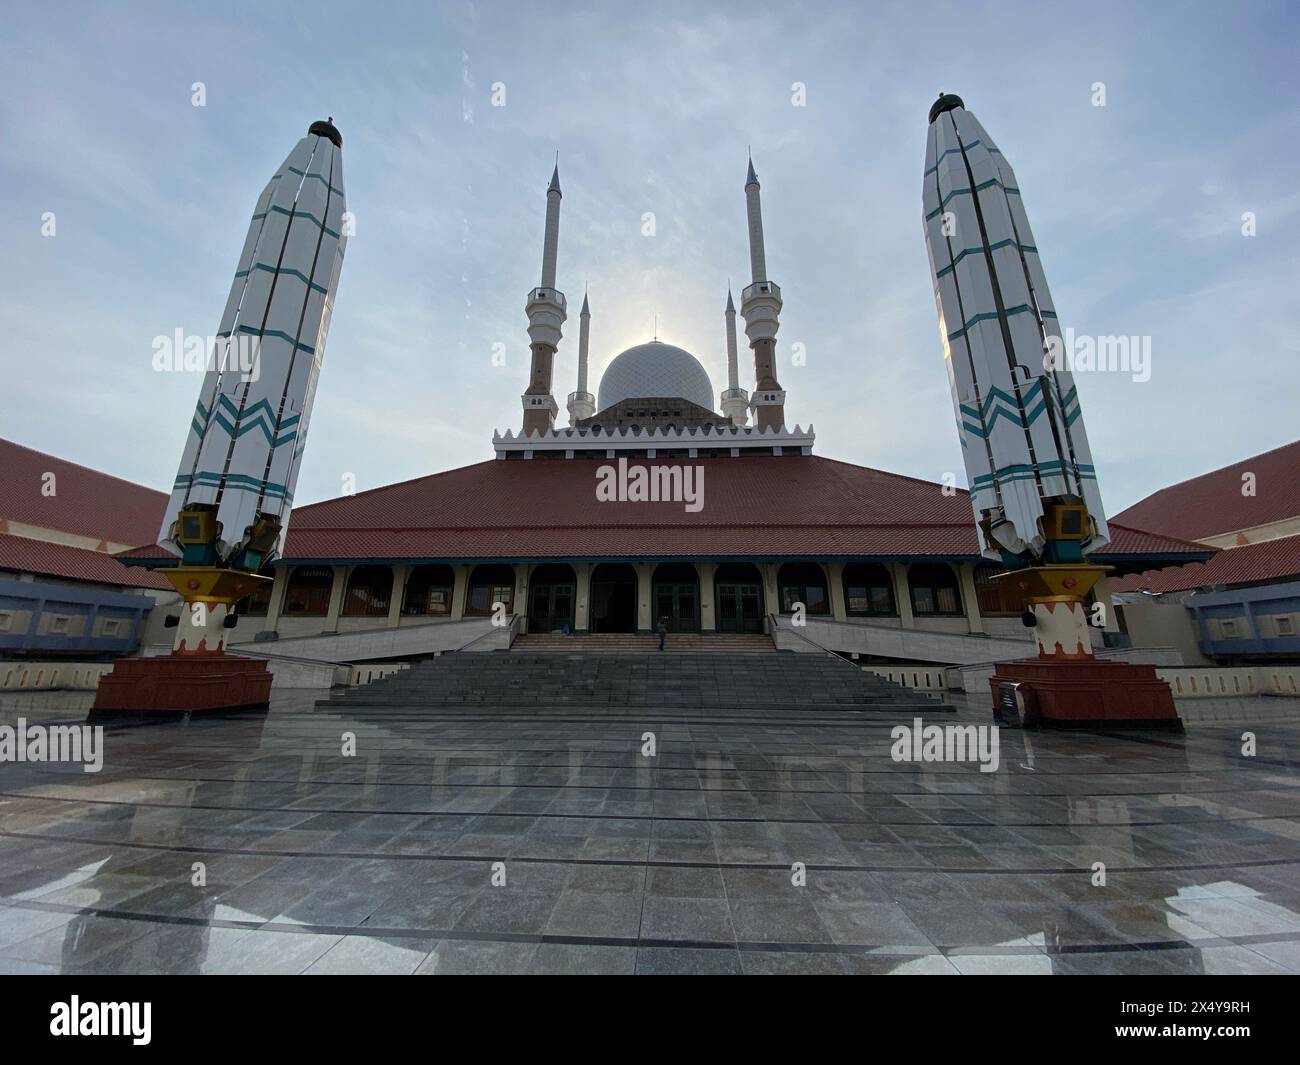 Masjid Agung Jawa Tengah or Great Mosque of Central Java area in Semarang, Indonesia Stock Photo